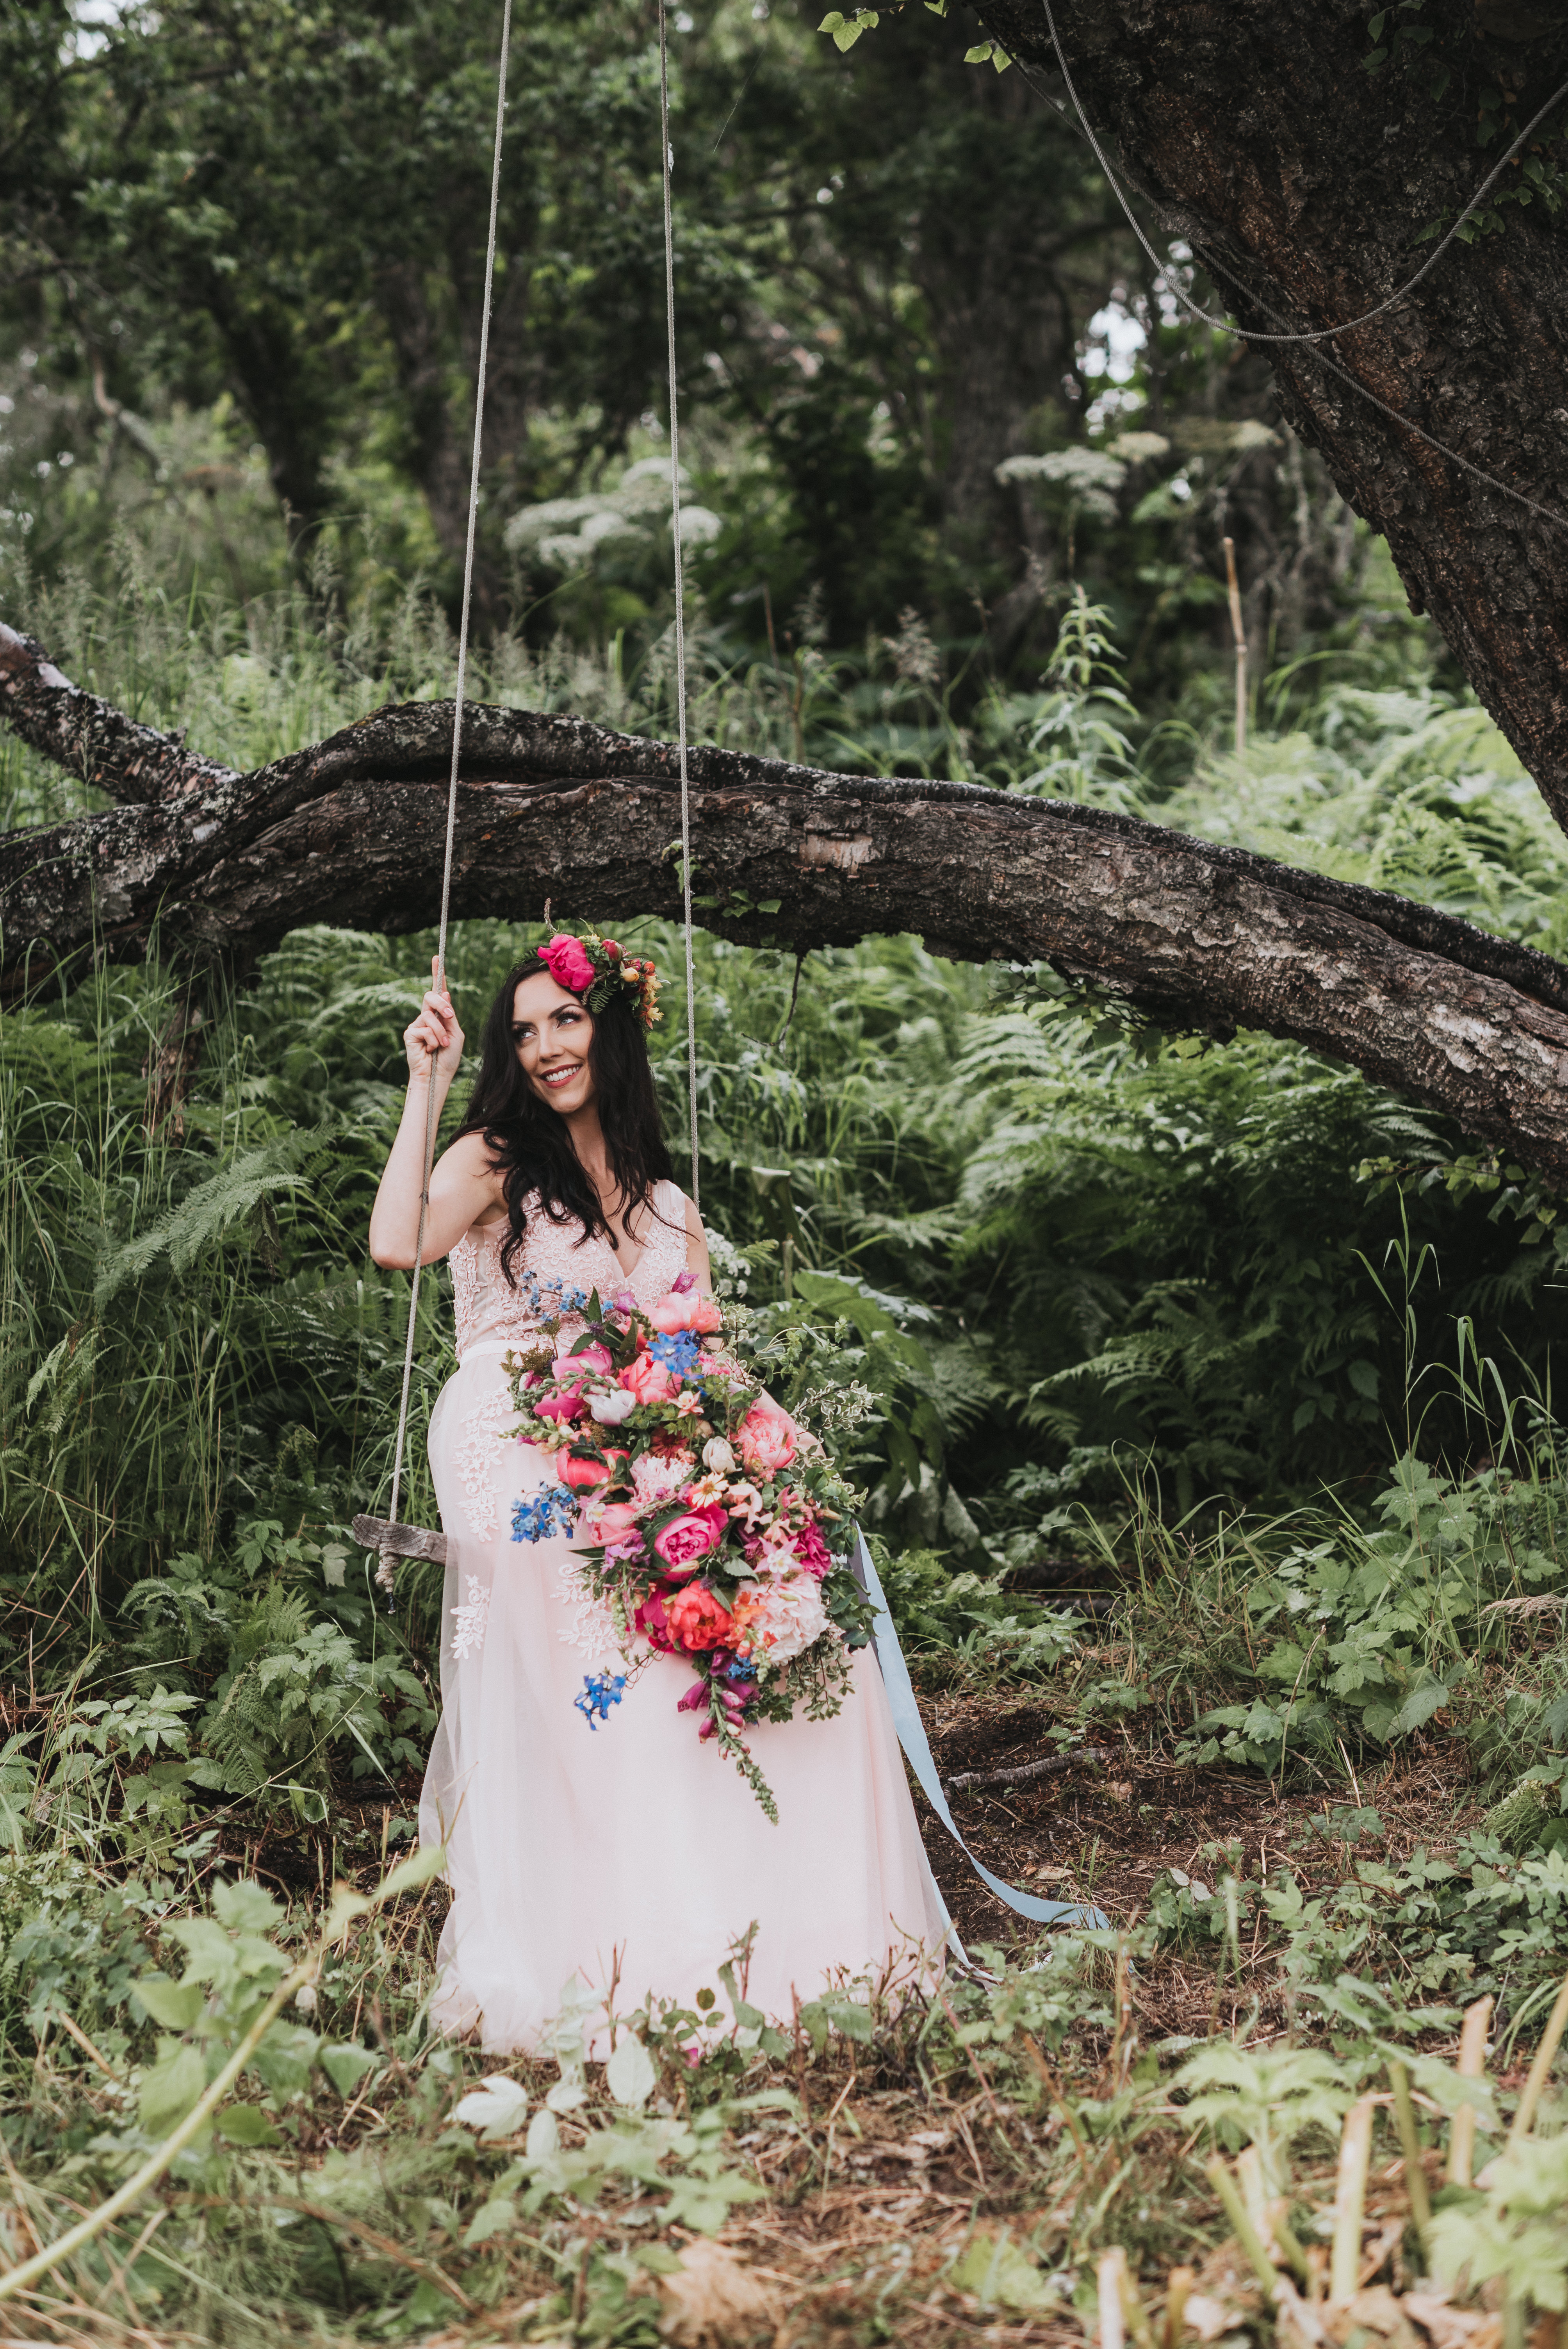 Alaska Peony Farm Styled Bridal Session | Donna Marie Photography